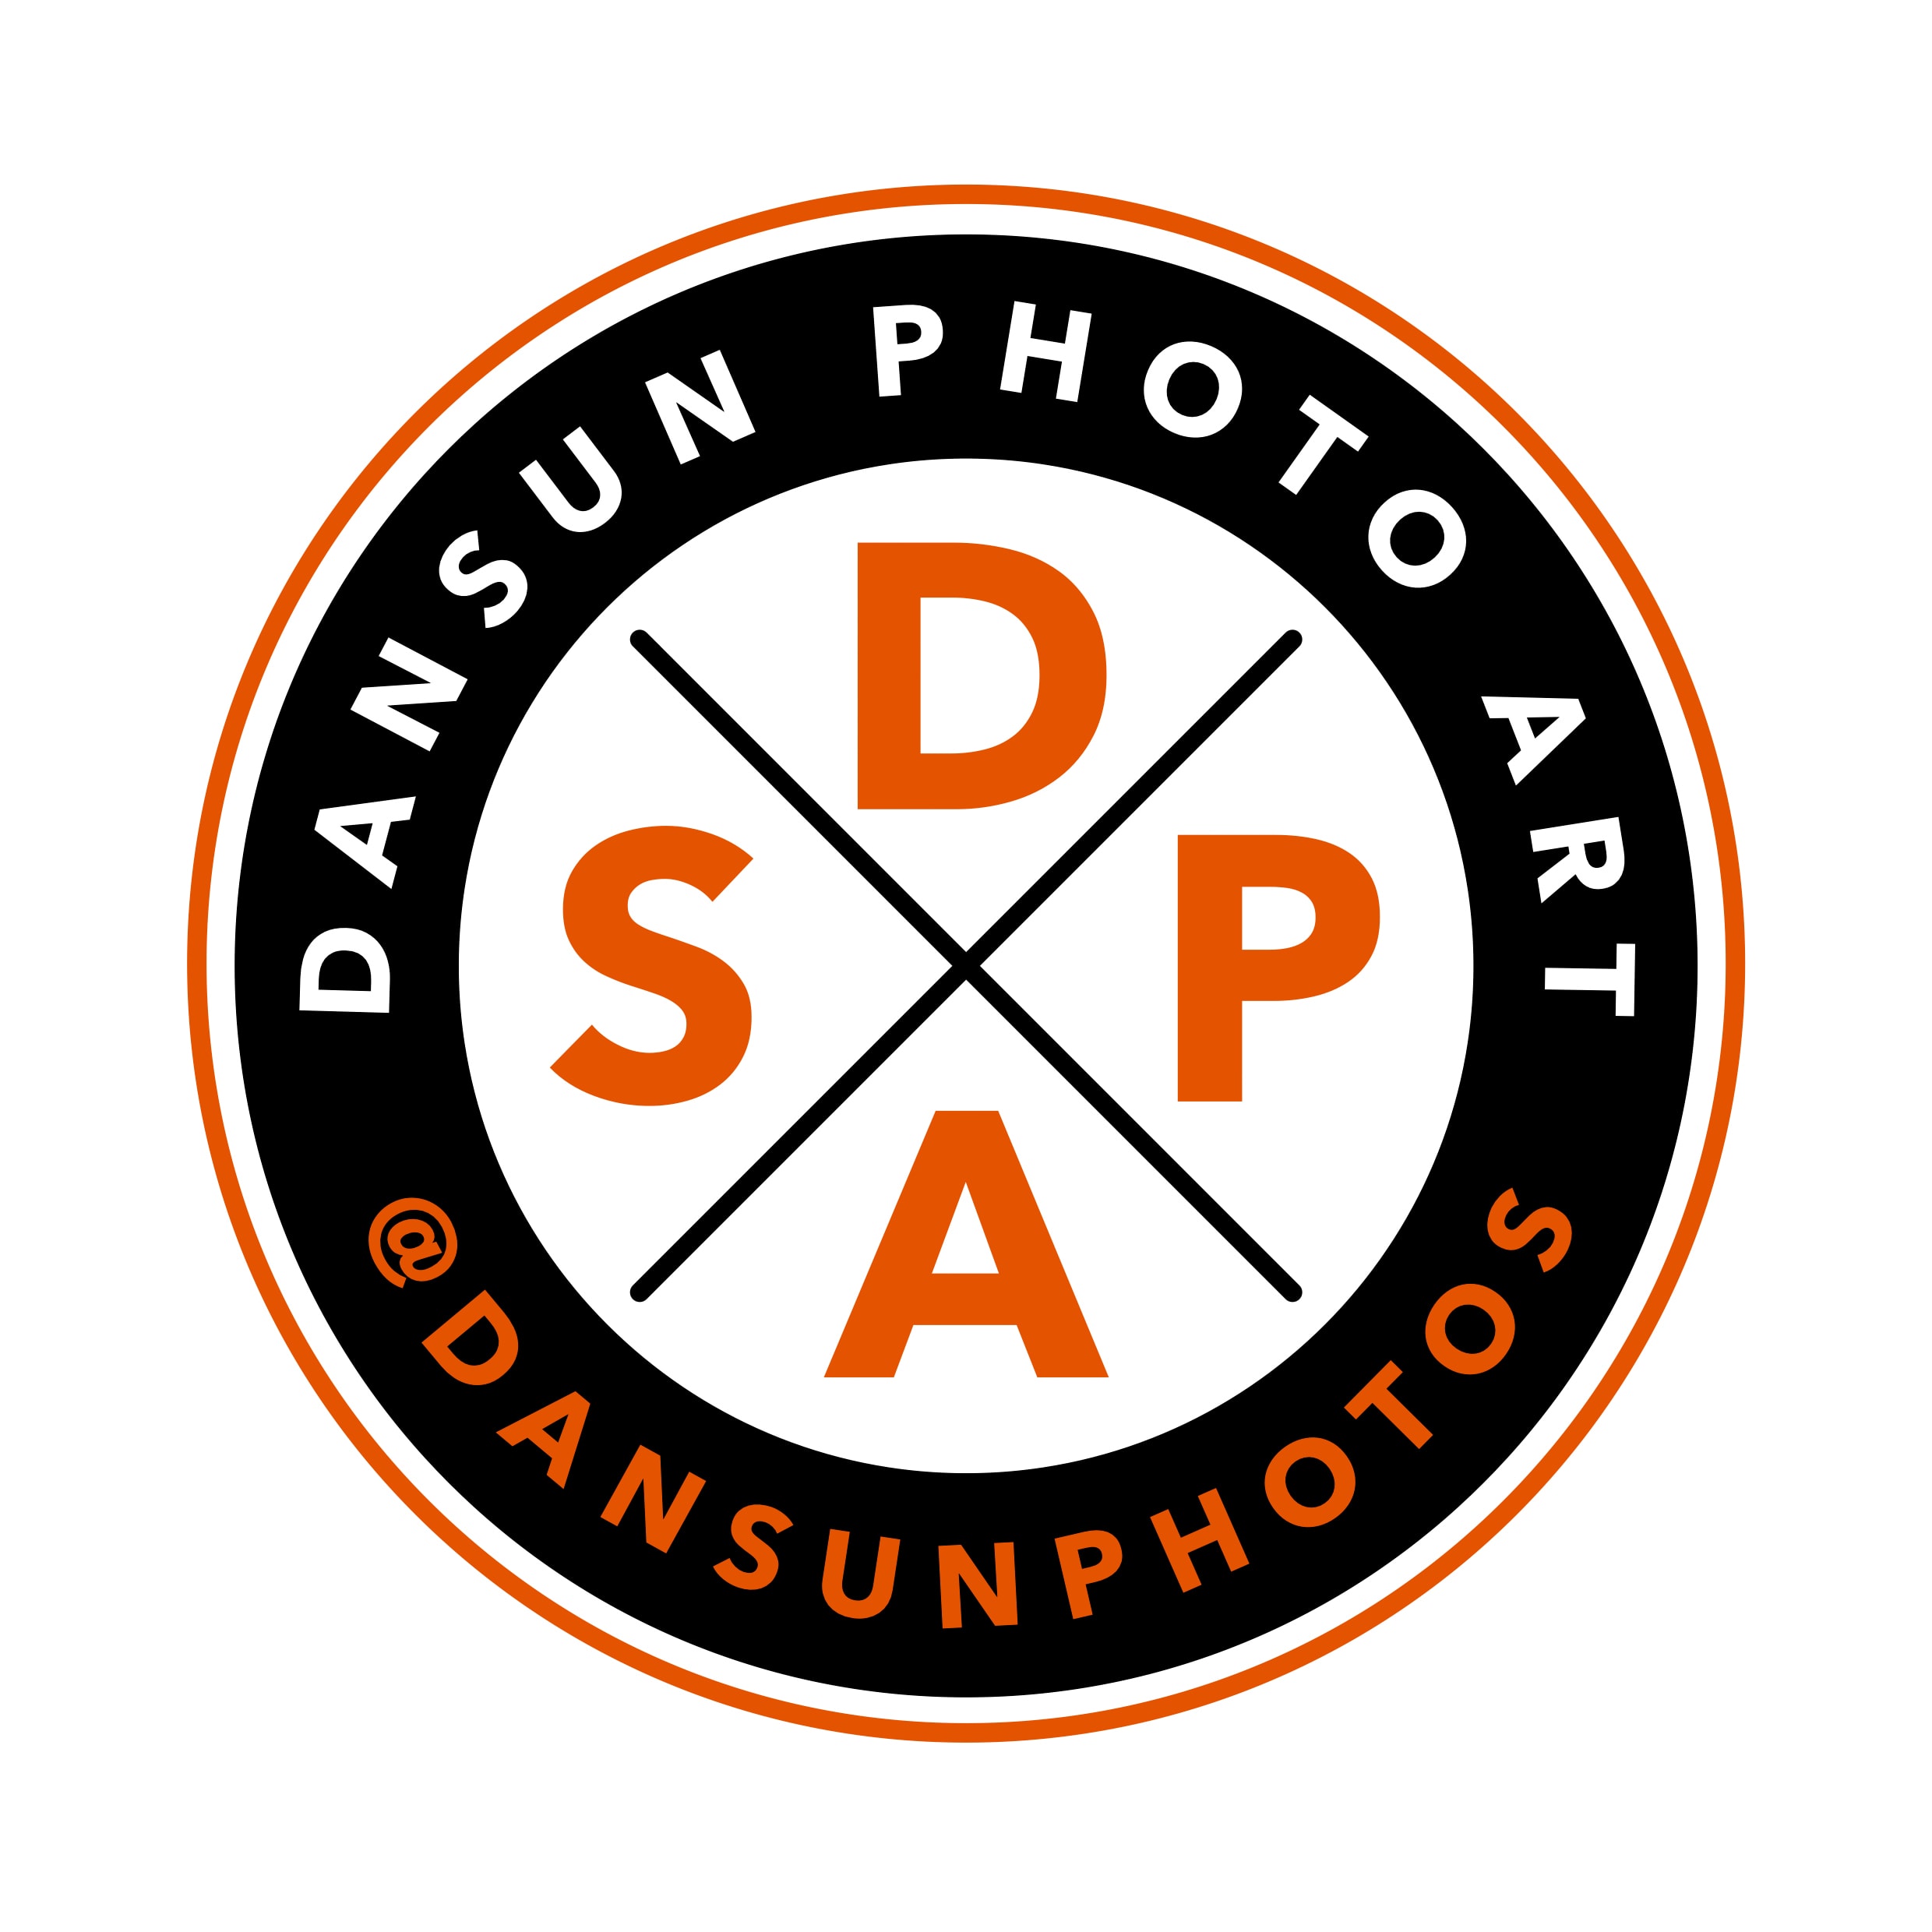 DanSun Photo Art